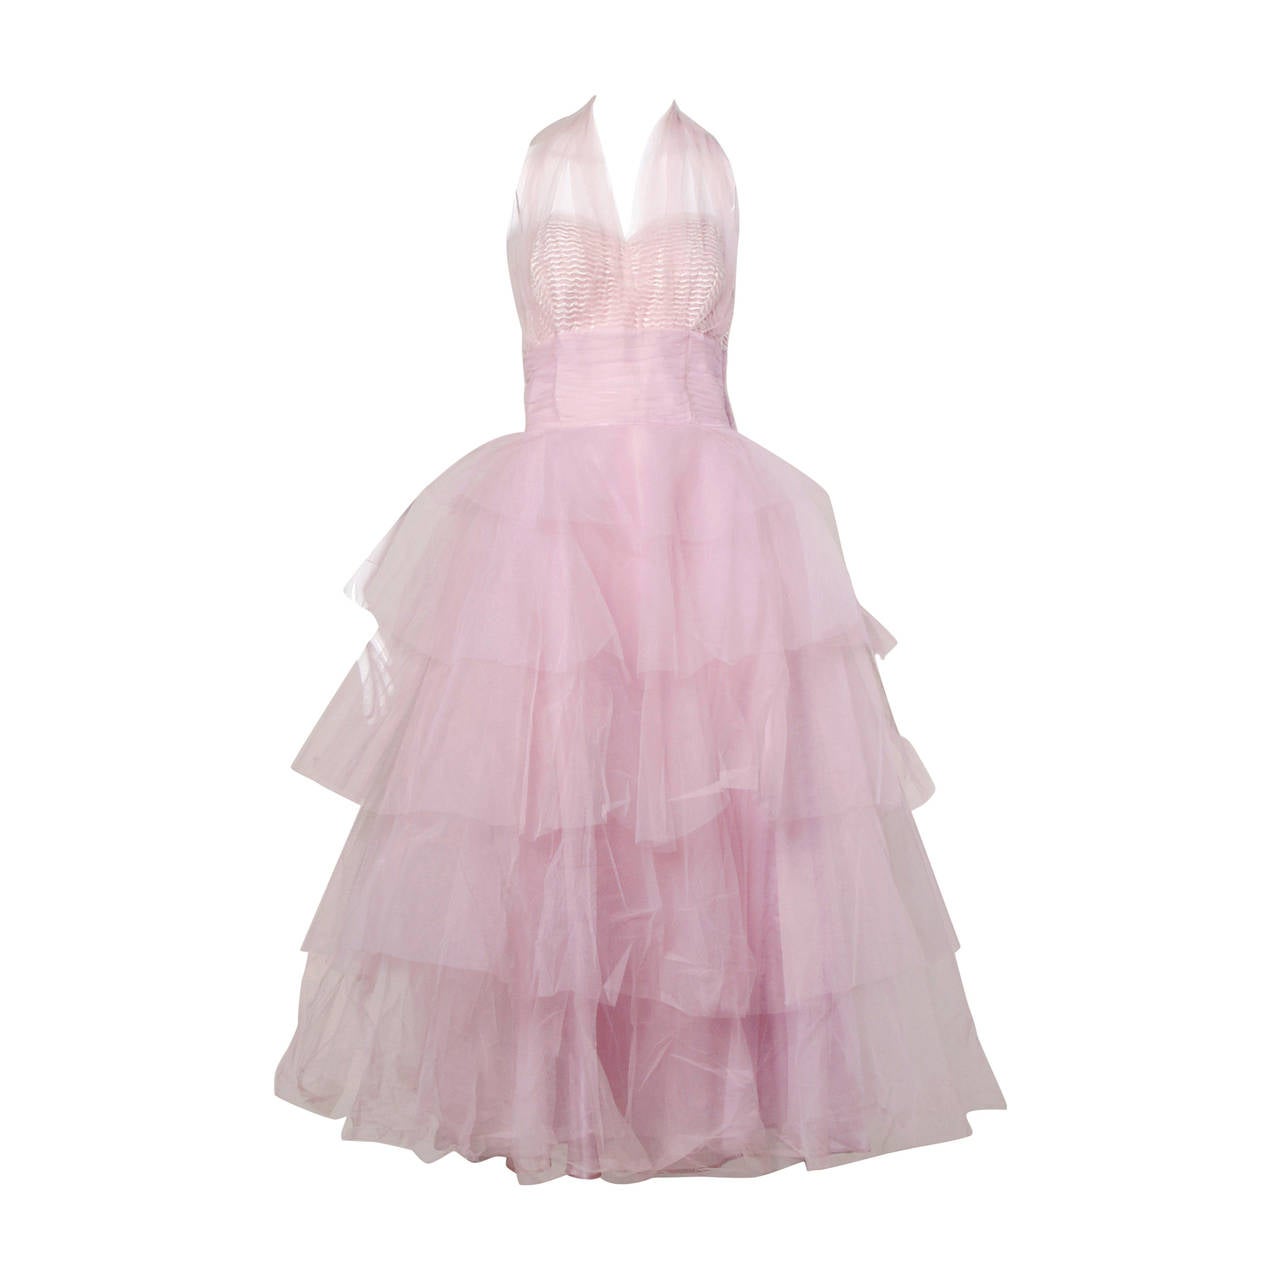 1950er Jahre Vintage Gestuftes formelles Barbie-Kleid aus Tüll in Rosa mit Kuchenförmigem Rand